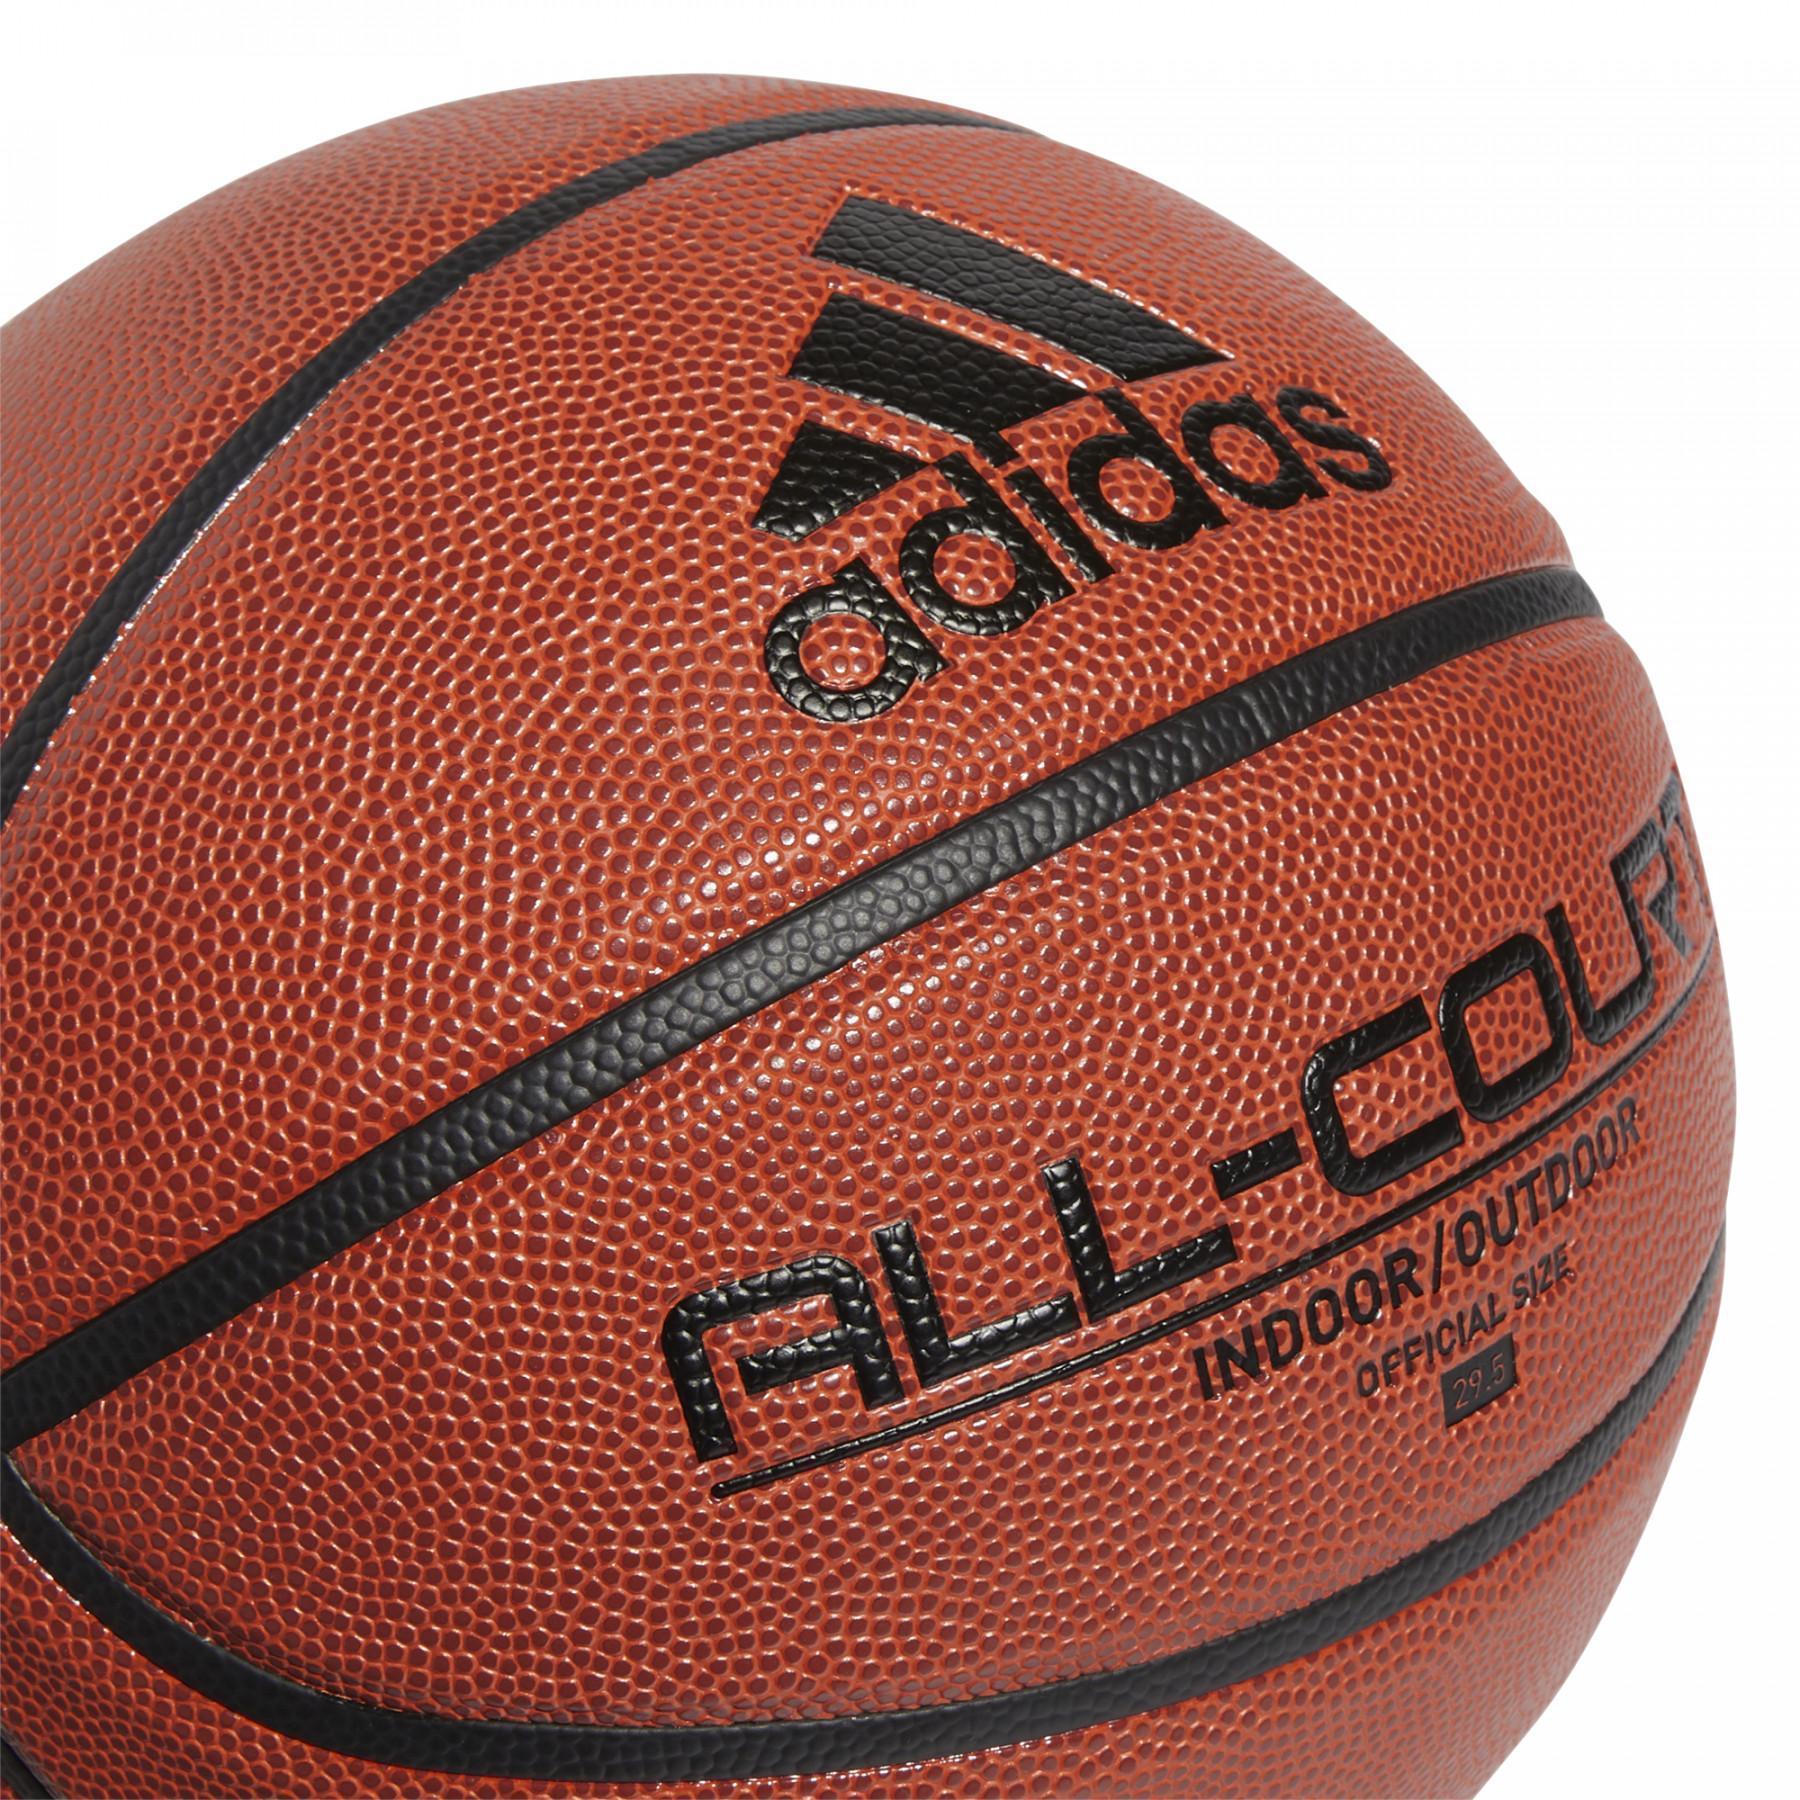 Basketball adidas All Court 2.0